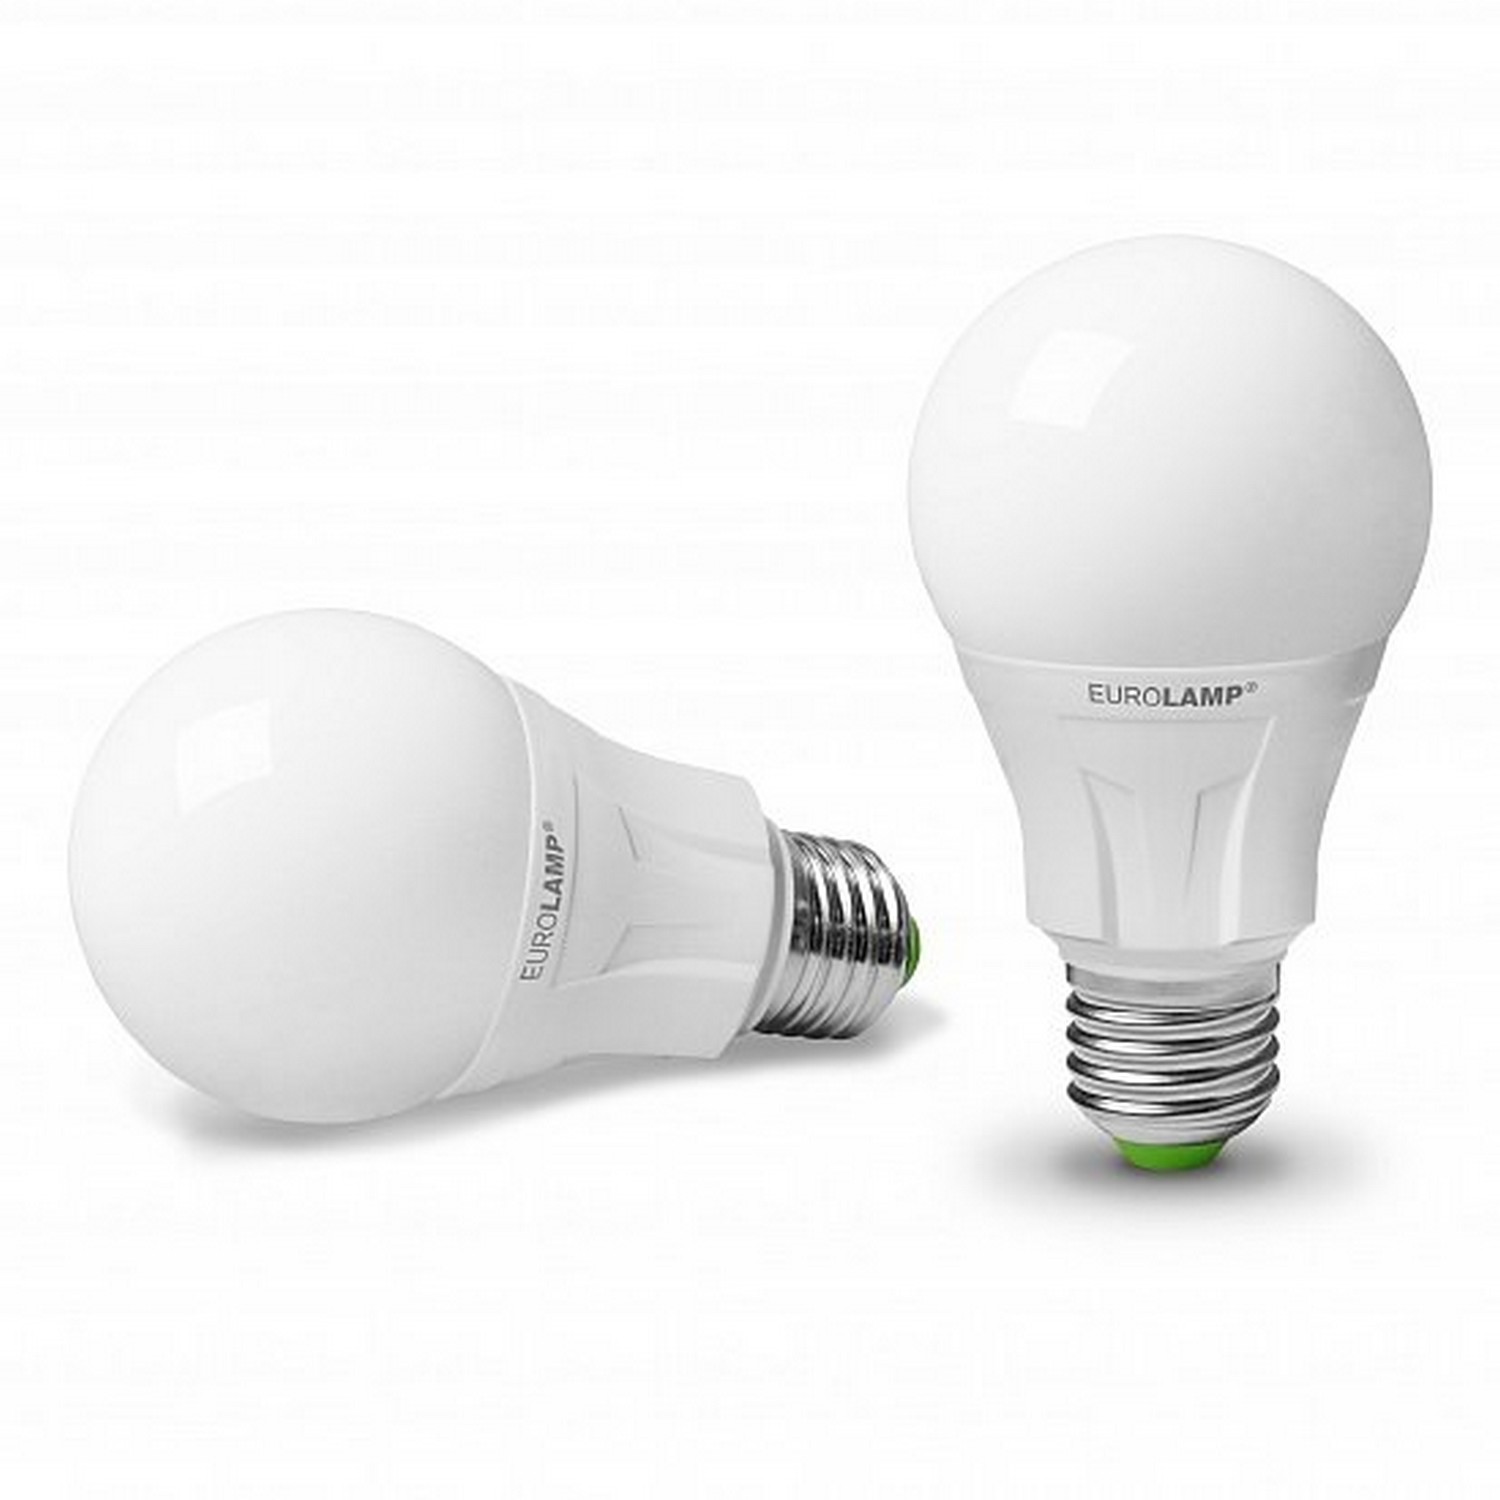 Лампа Eurolamp LED TURBO NEW dimmable A60 10W E27 4000К цена 0.00 грн - фотография 2